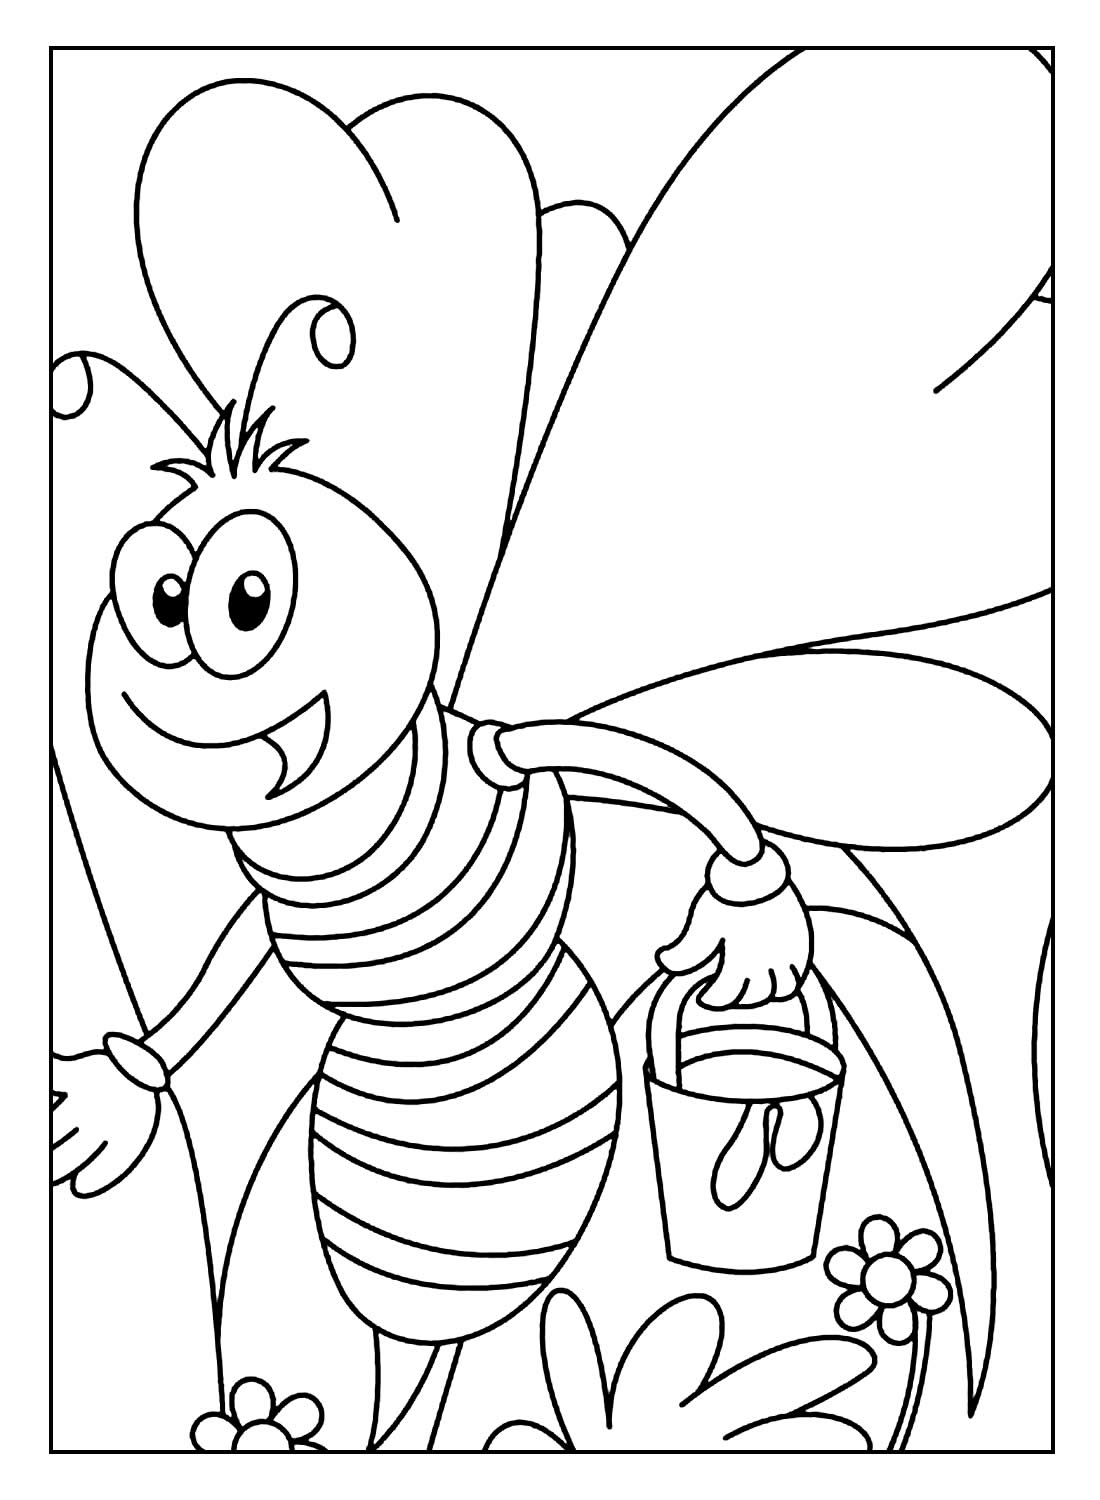 Муха цокотуха раскраска для детей. Пчела раскраска для детей. Насекомые раскраска для детей. Раскраска пчёлка для детей. Раскраска насекомые для малышей.